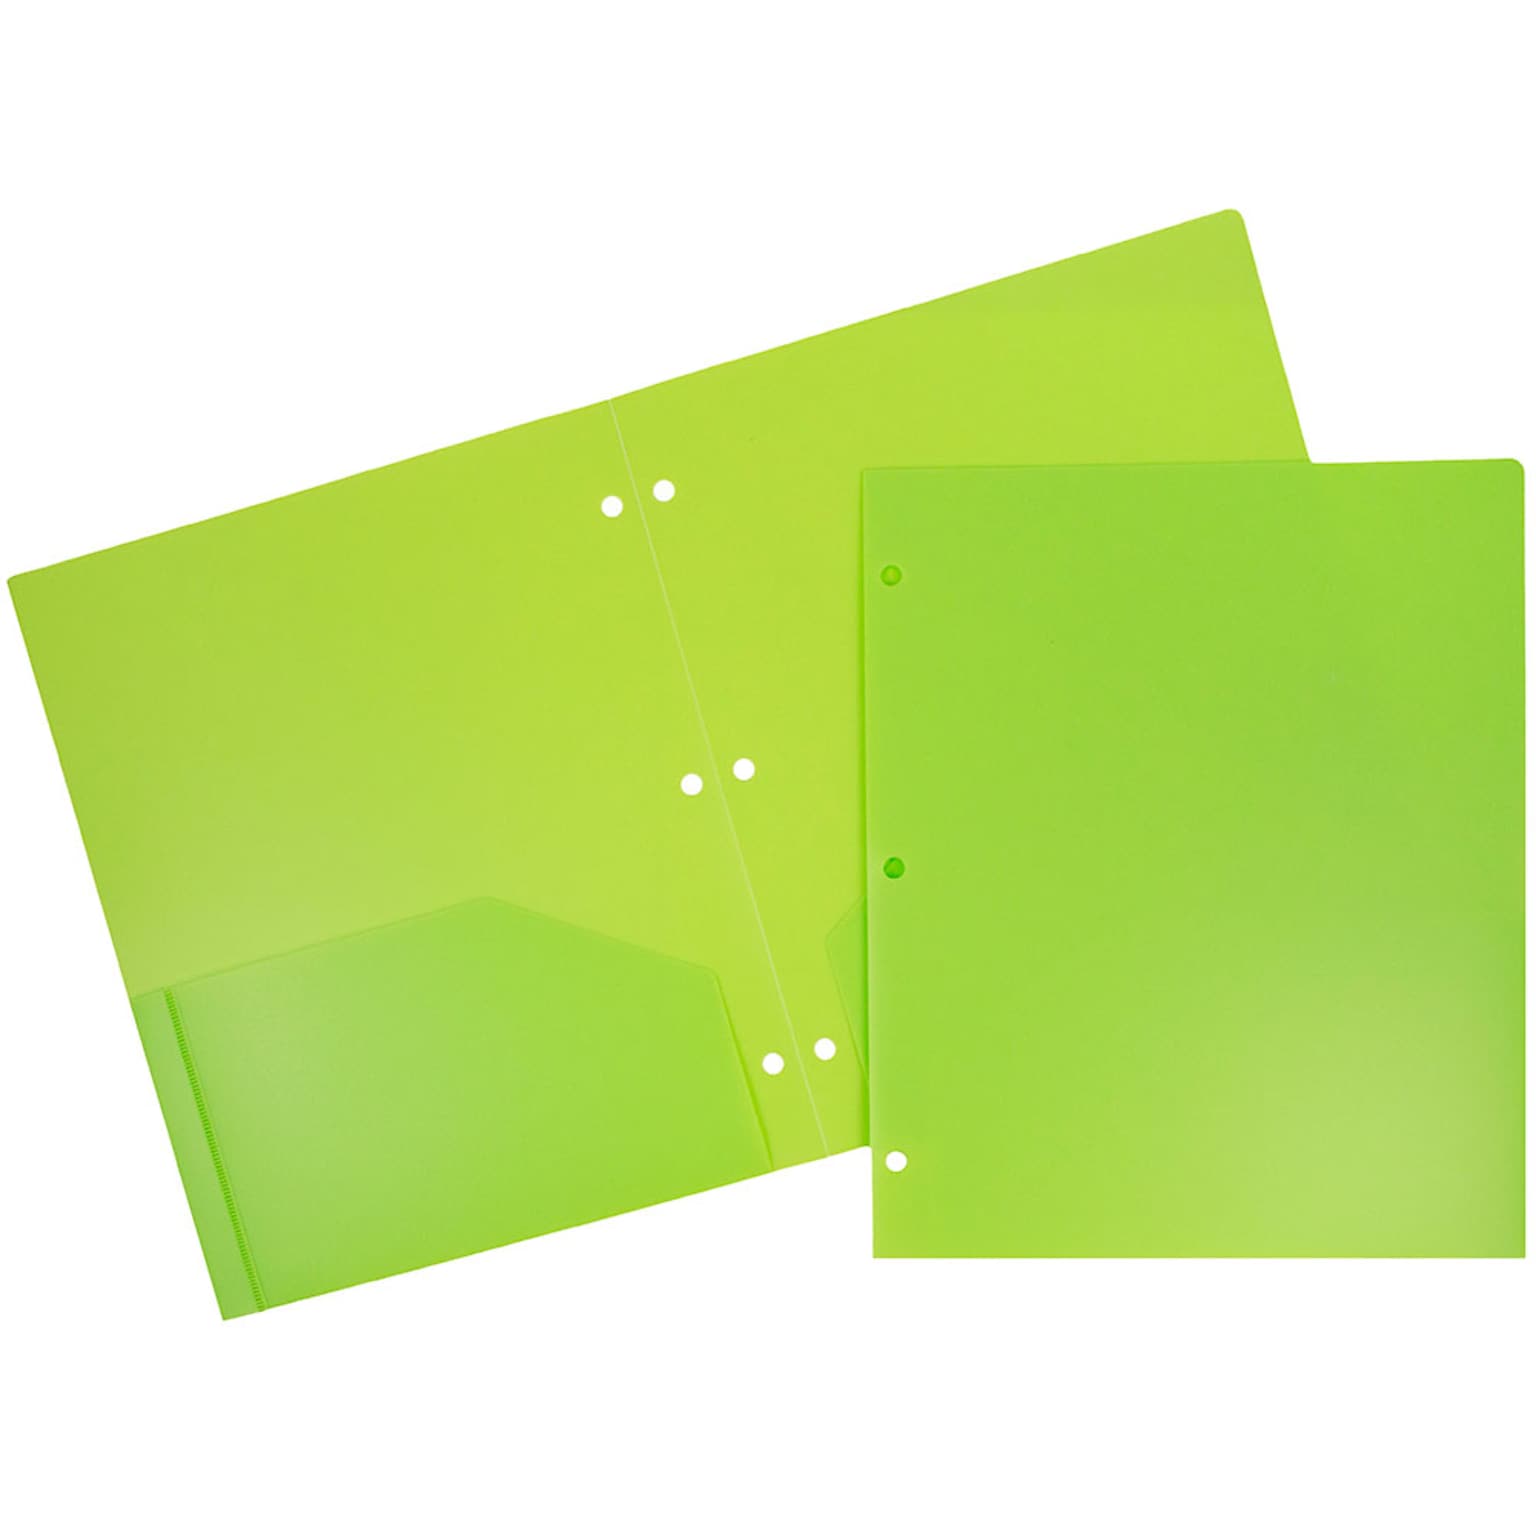 JAM Paper Heavy Duty 3 Hole Punch Two-Pocket Plastic Folders, Lime Green, 6/Pack (383HHPLID)